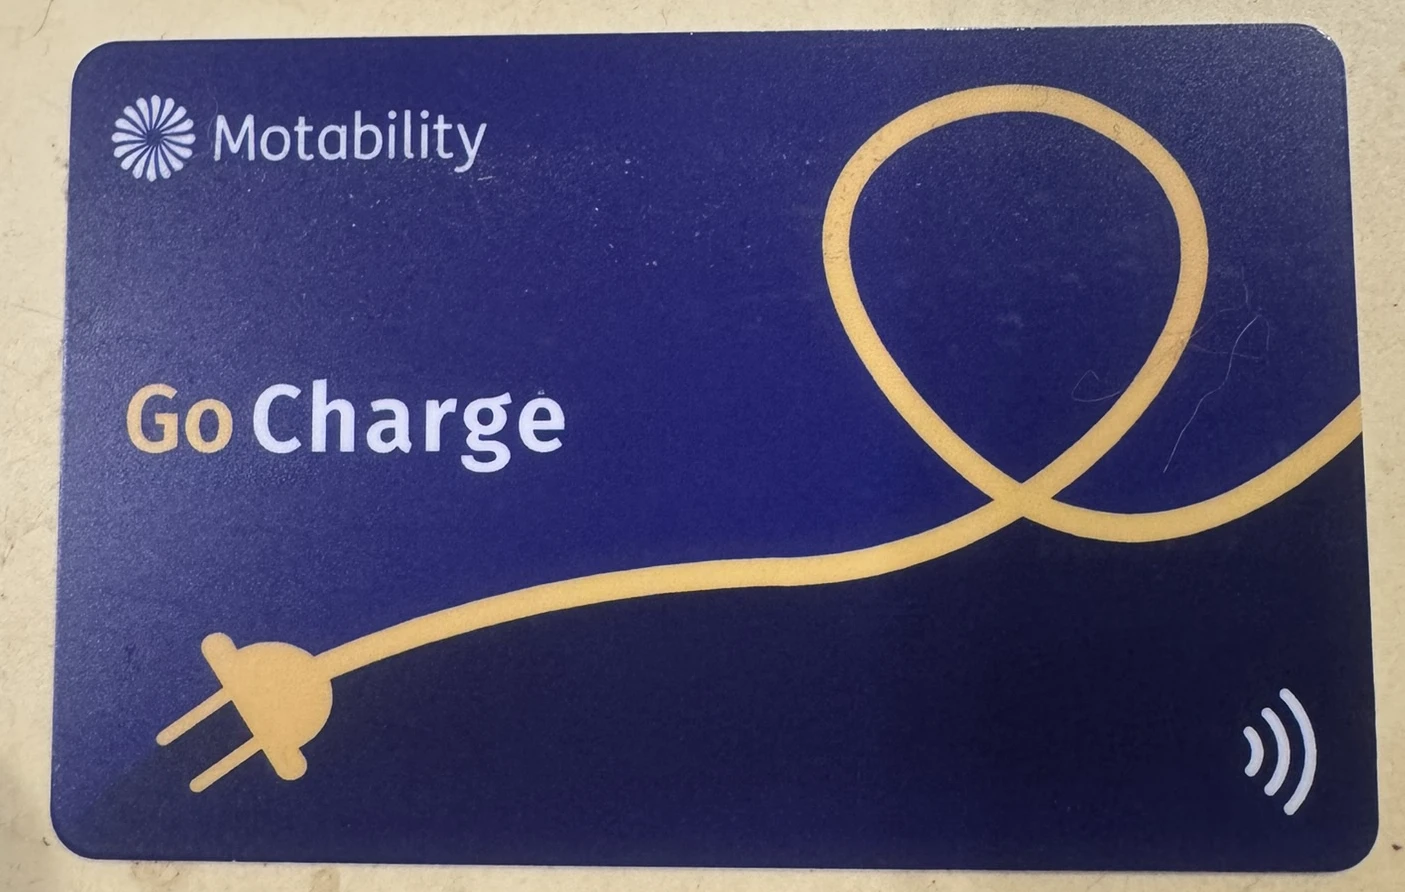 Motability Go Charge